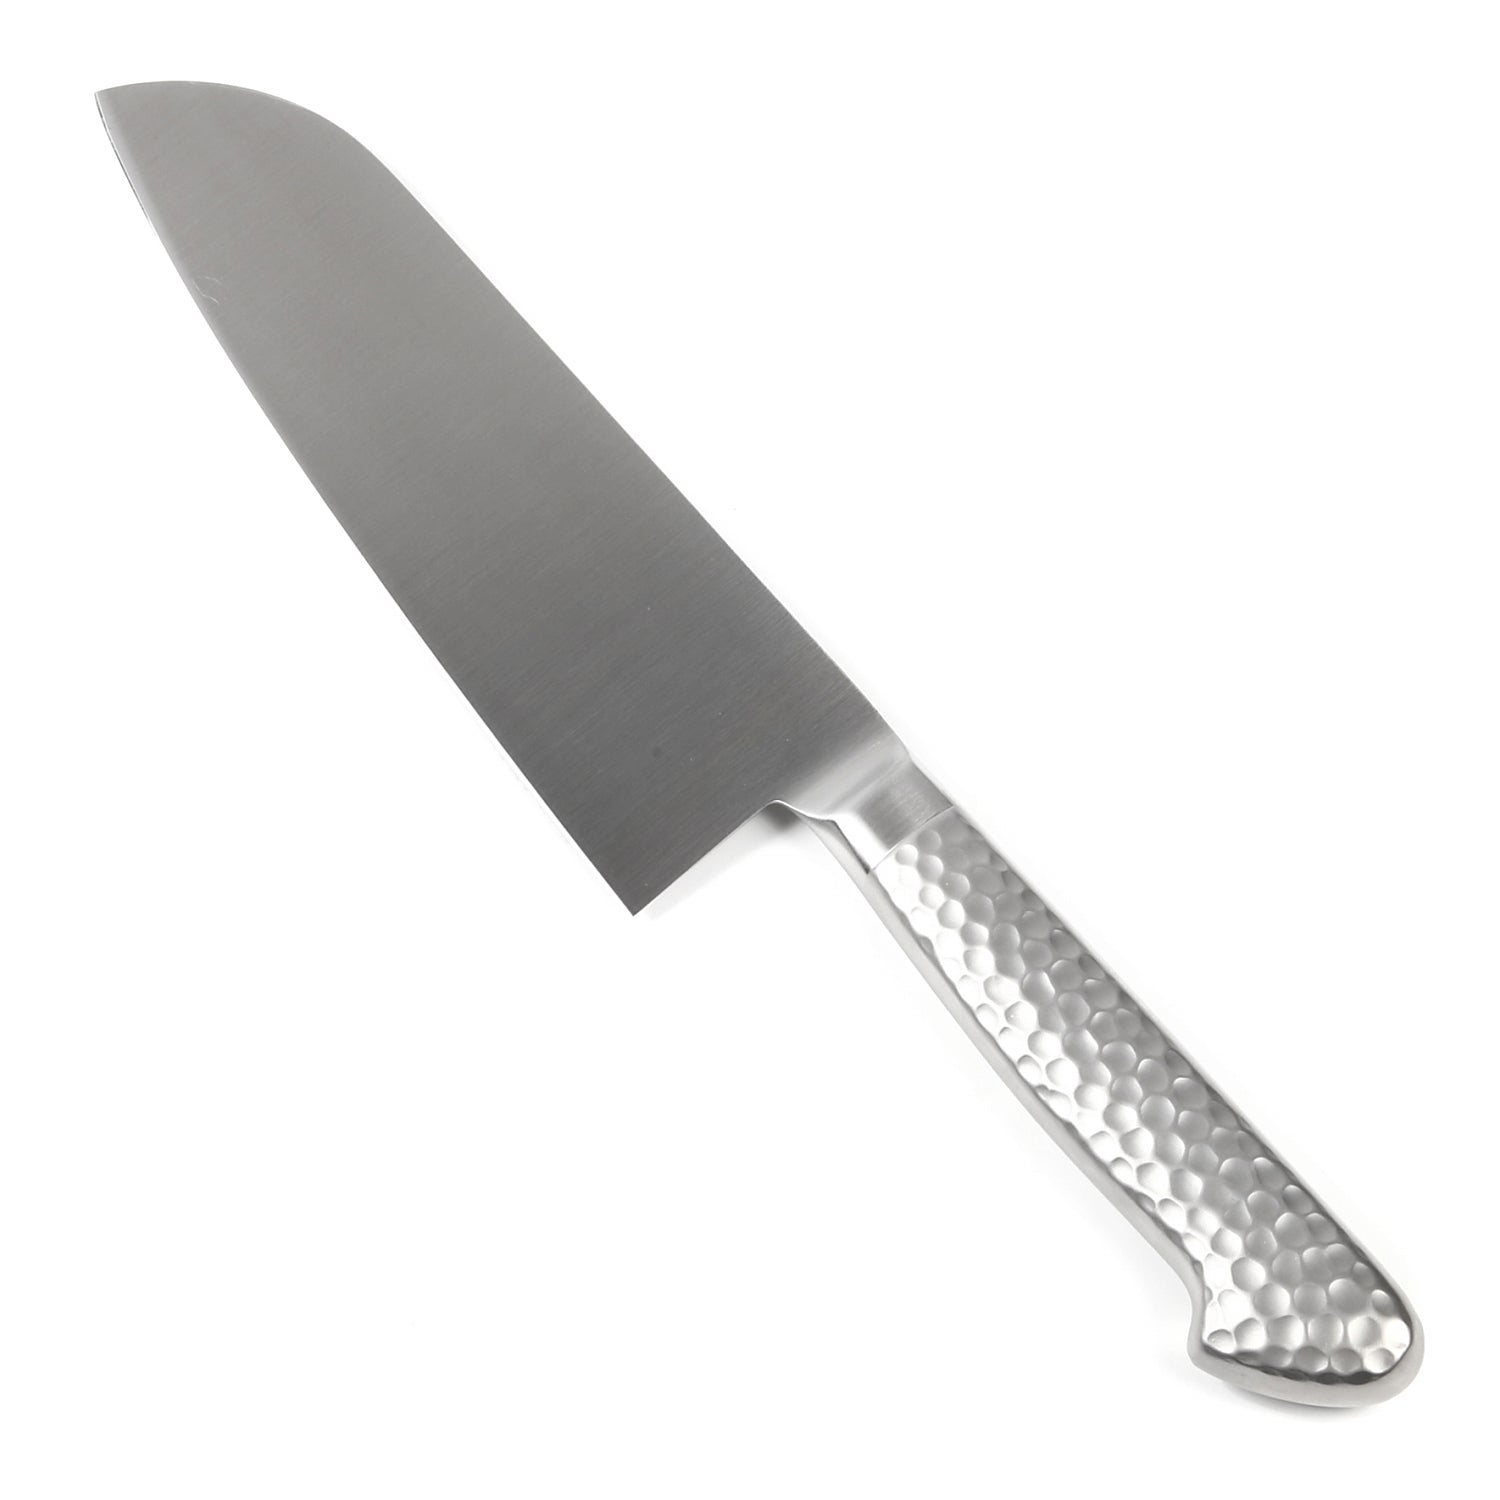 Syosaku Japanese Chef Knife Molybdenum Vanadium Stainless Steel with Bolster, Gyuto 7-Inch (180mm) Dishwasher Safe